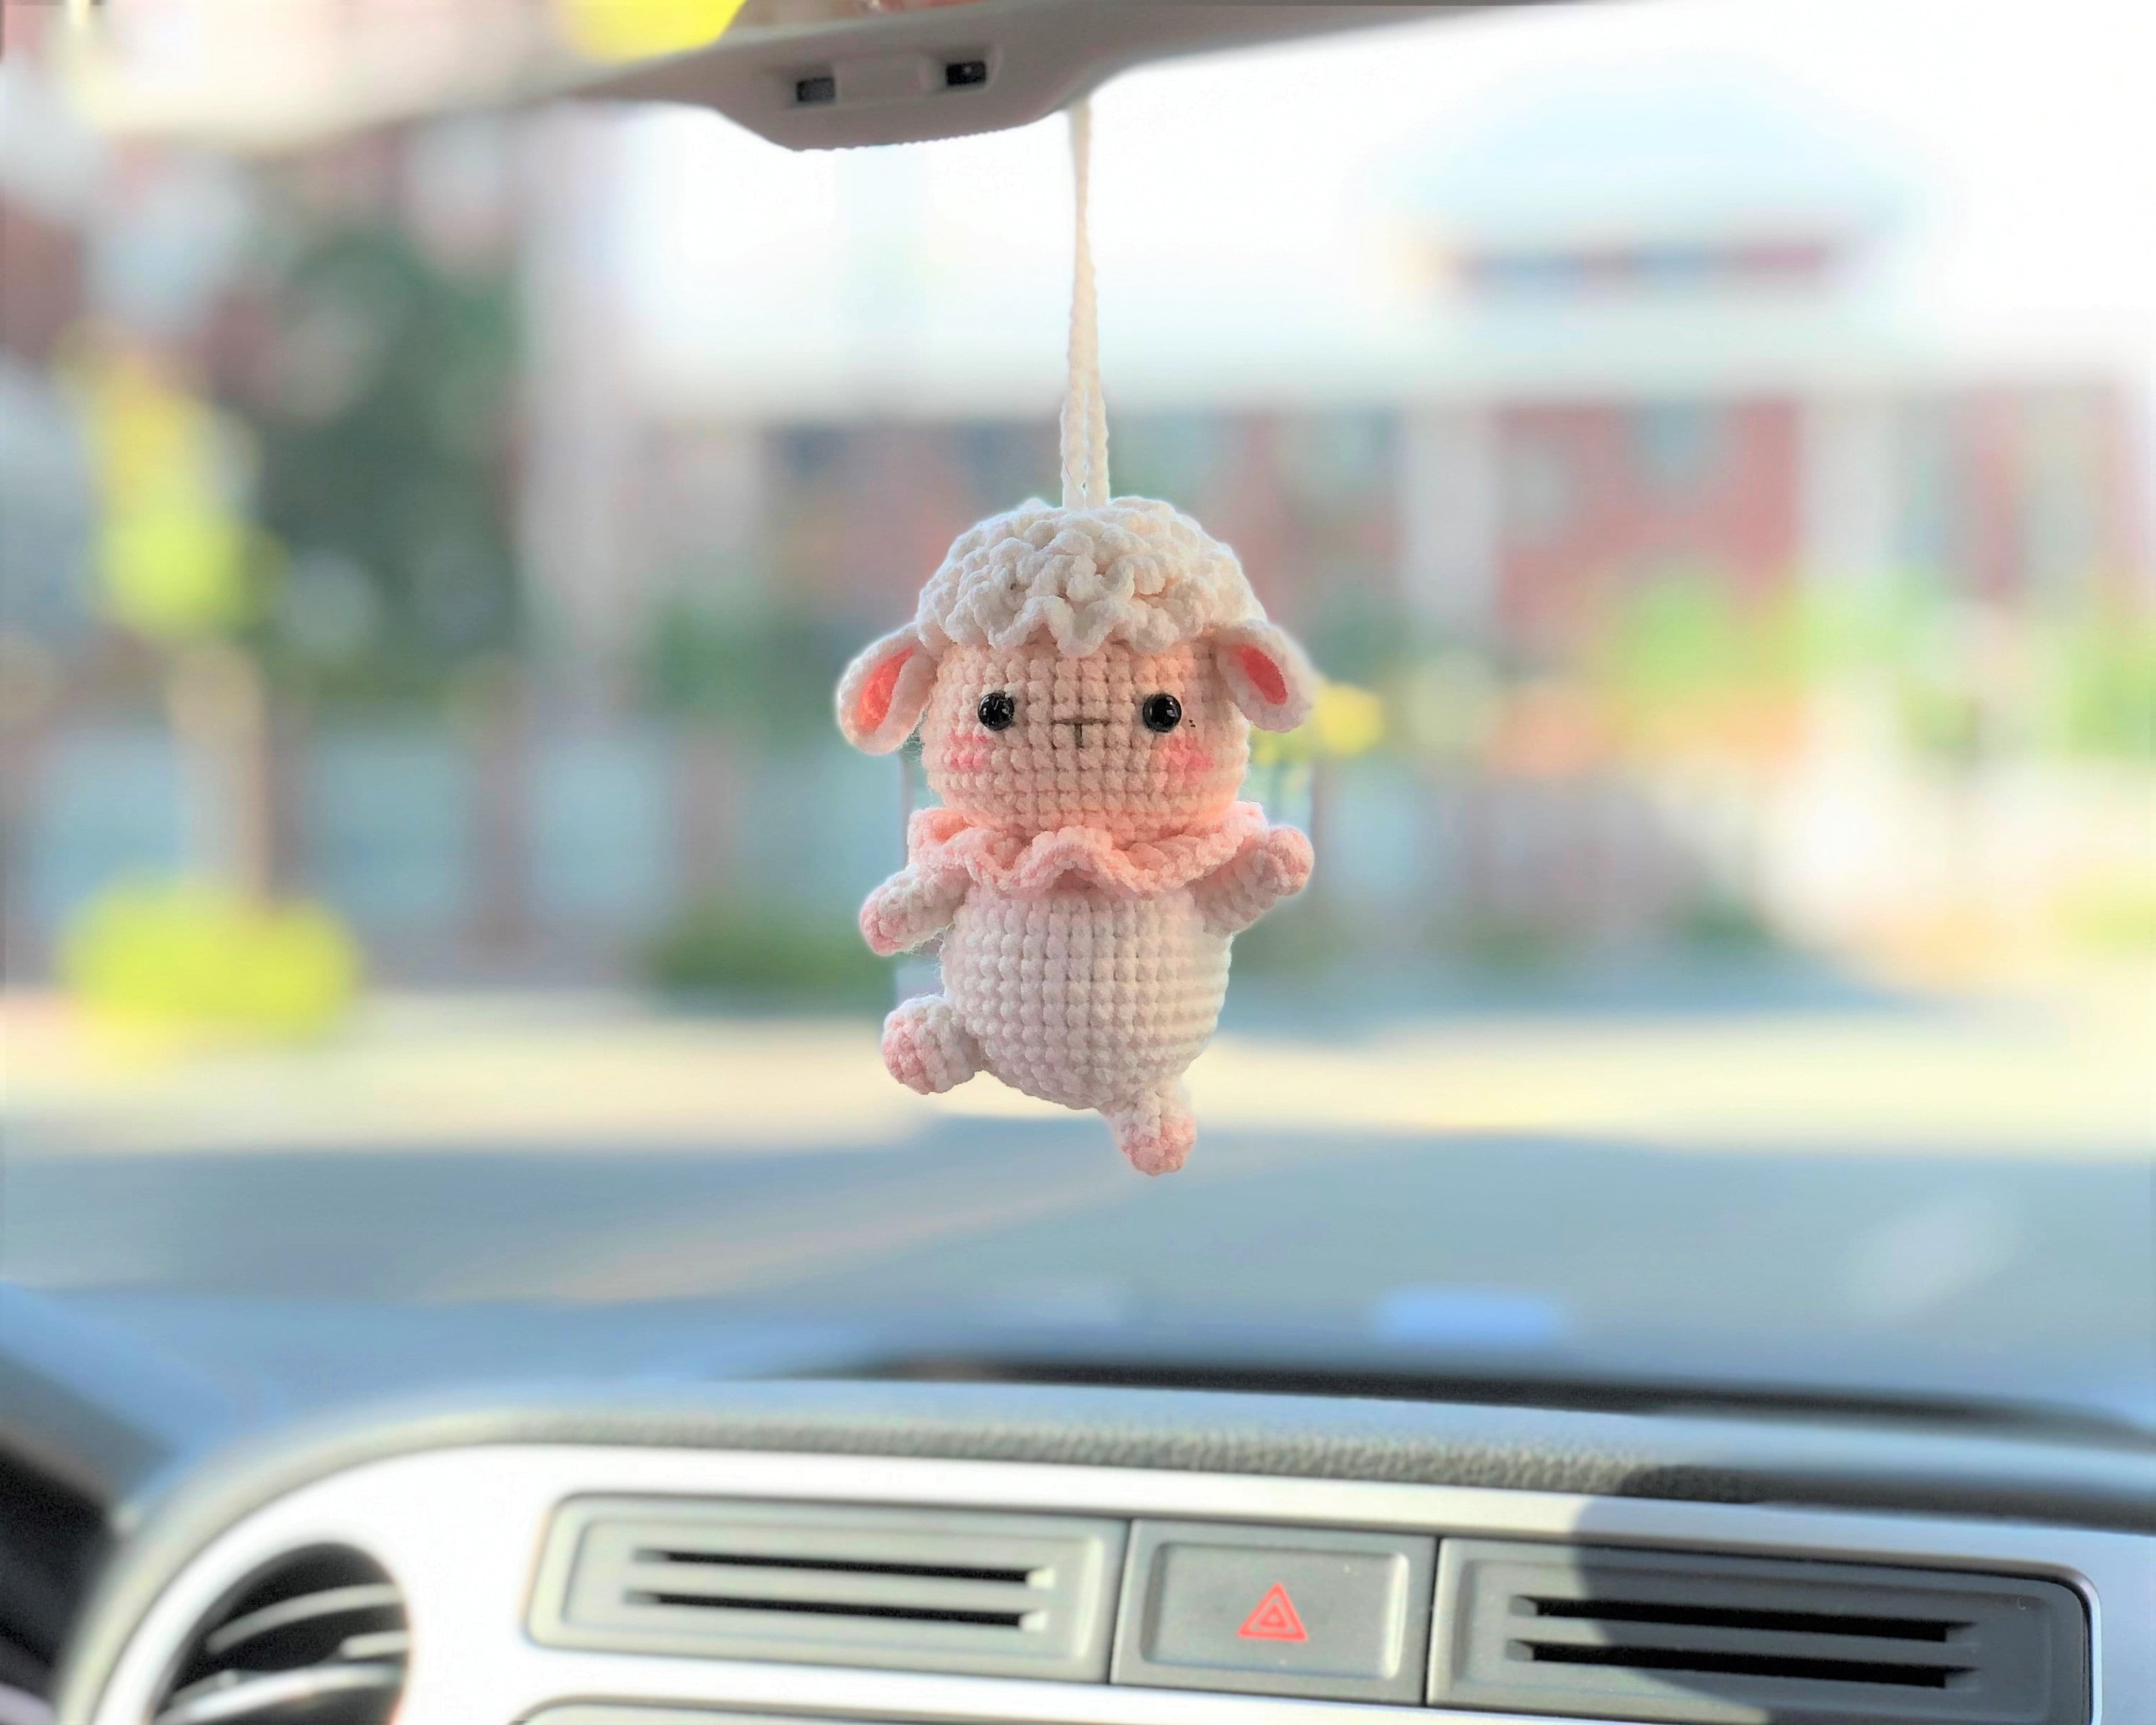 Dancing Piggy Car Hanging Accessory, Crochet Animals Rear View